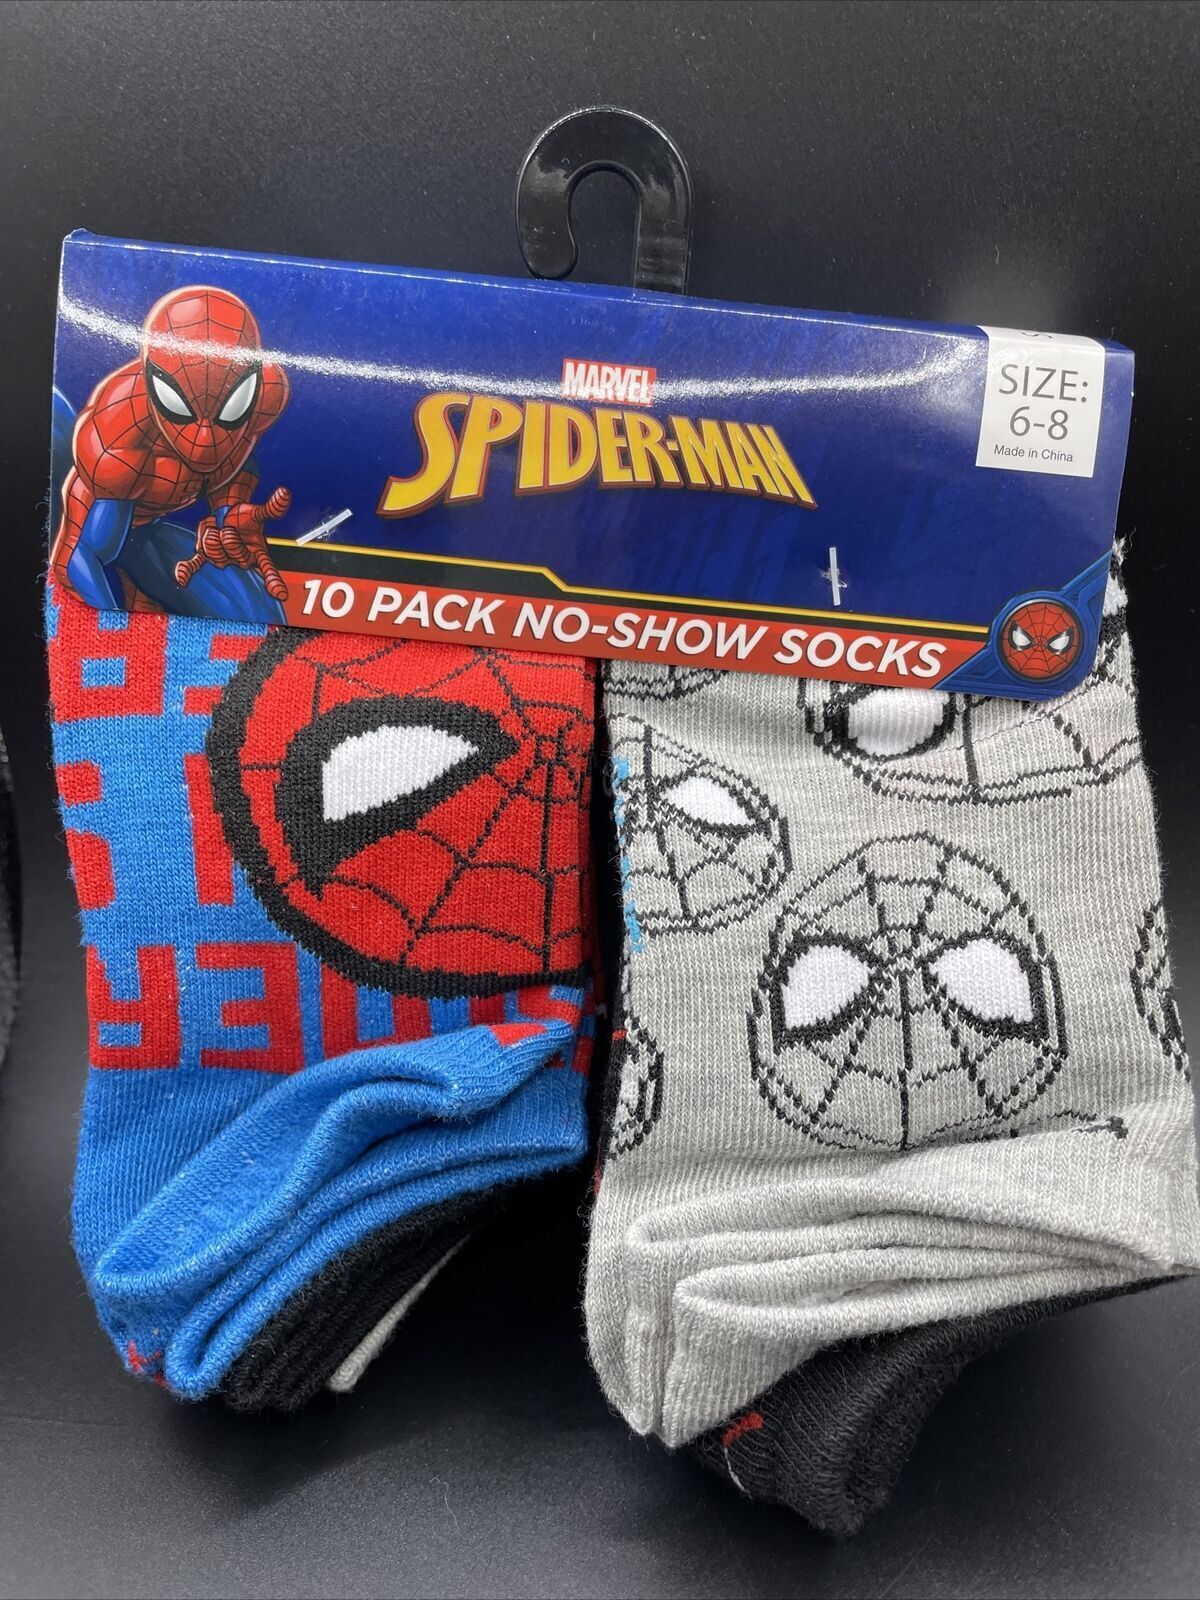 Marvel Spiderman Kids 10 Pack No Show Socks Size 6-8